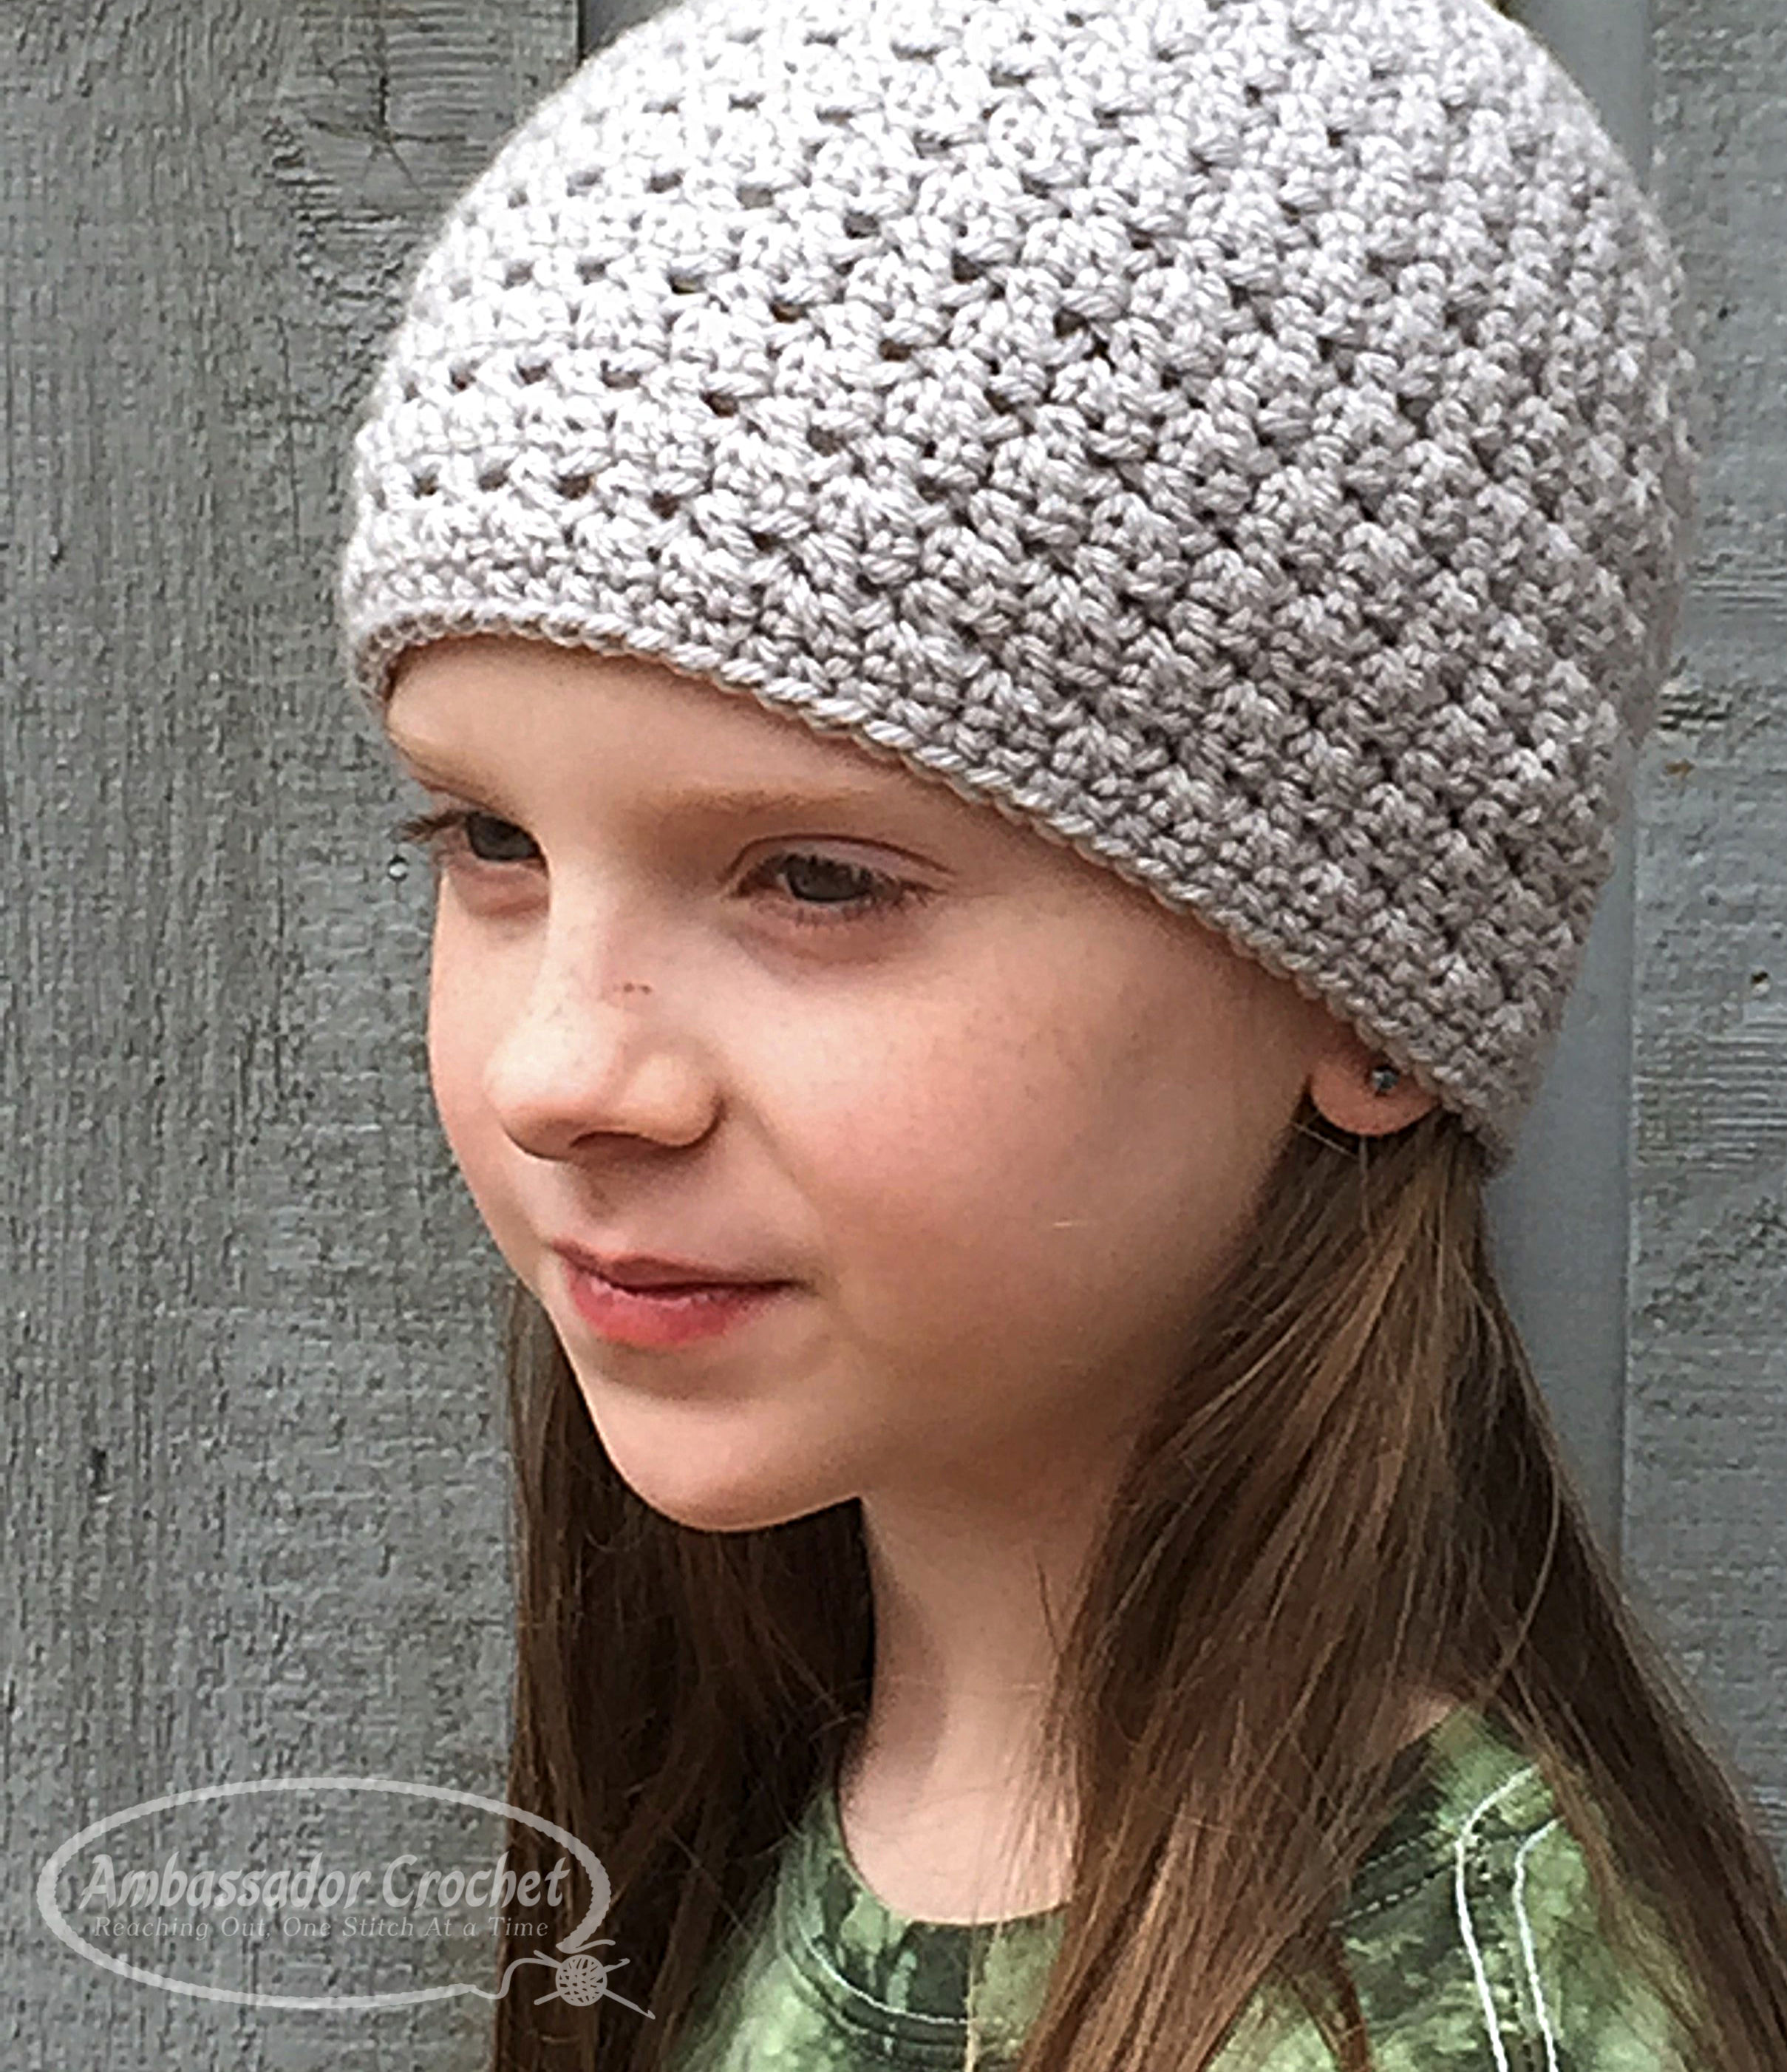 Hope Lives chemo hat - crochet pattern by Ambassador Crochet